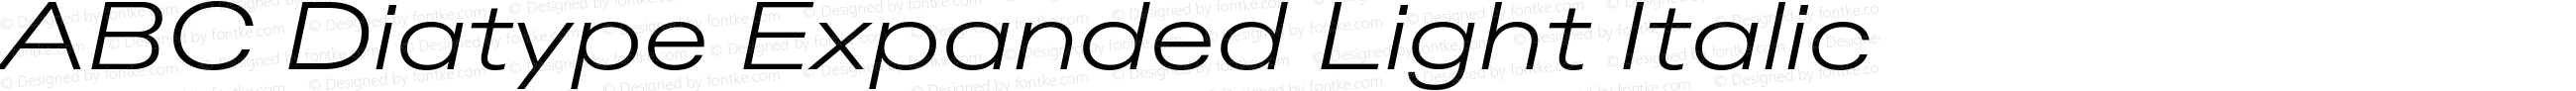 ABC Diatype Expanded Light Italic